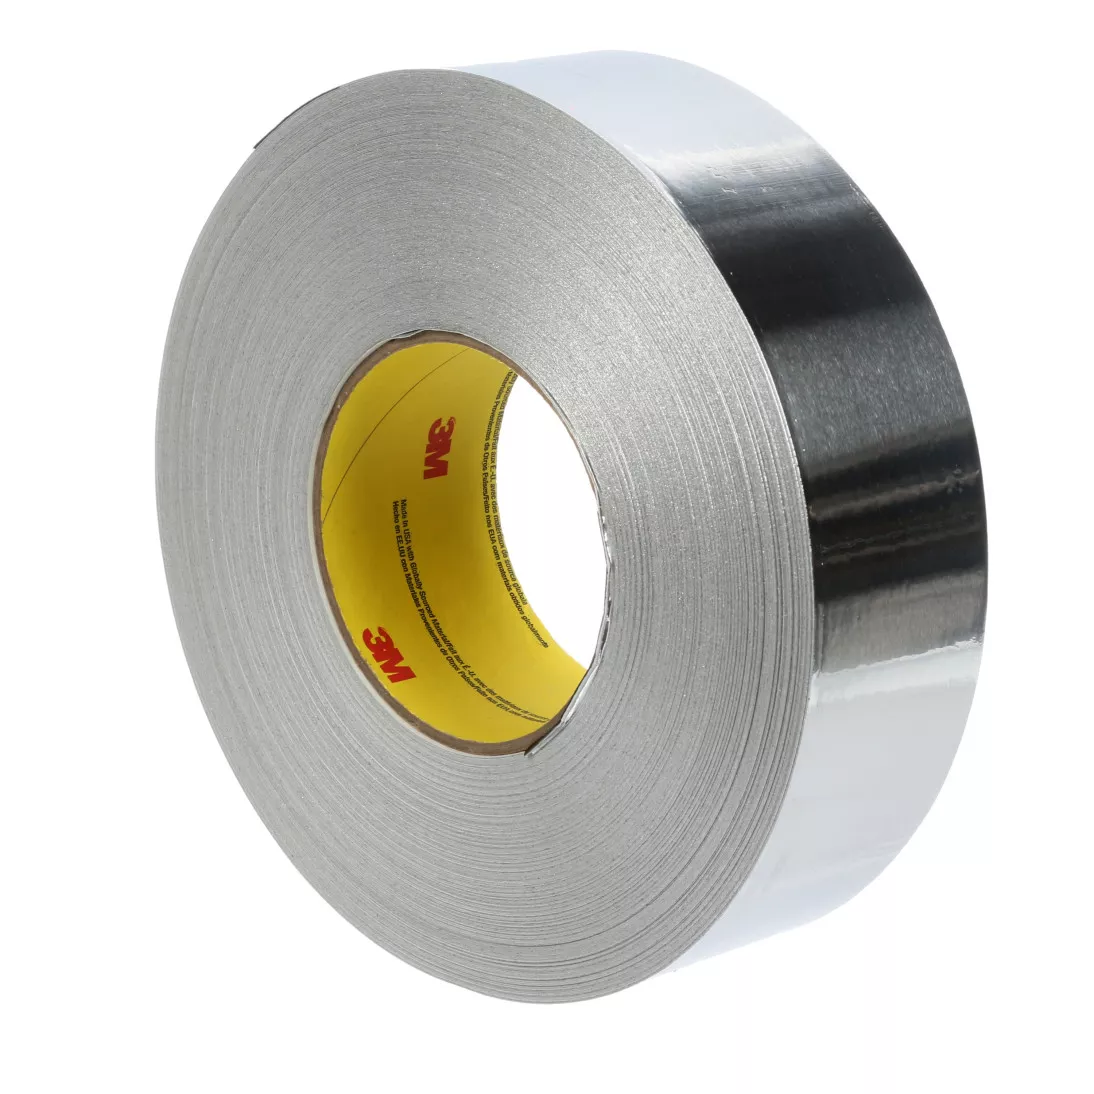 3M™ Aluminum Foil Tape 2C120, Silver, 99 mm x 45.7 m, 1.8 mil, 12 rolls
per case